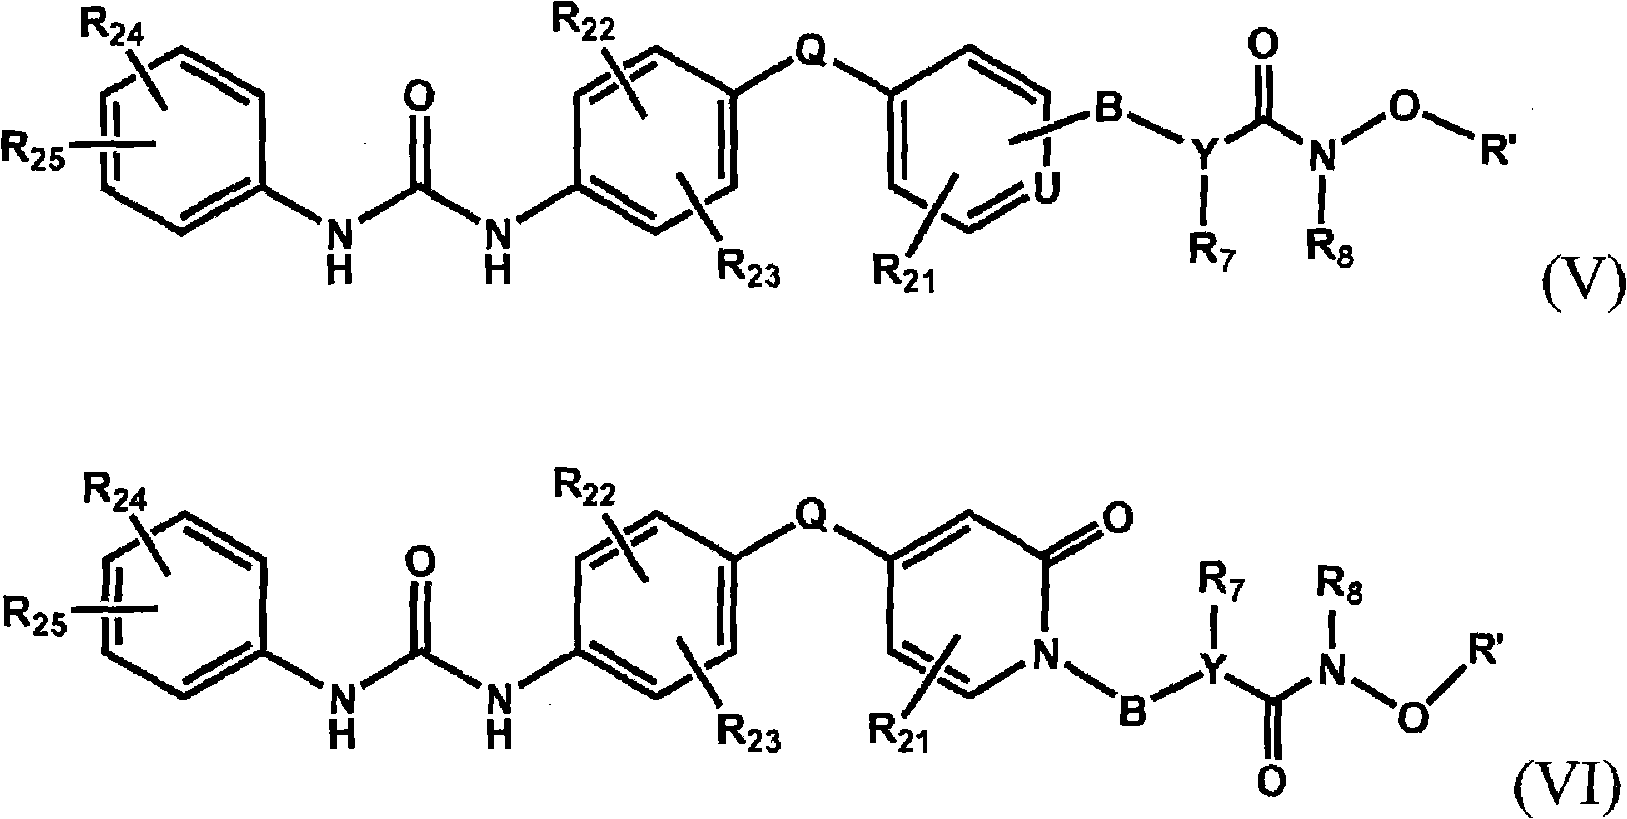 Raf kinase inhibitors containing a zinc binding moiety